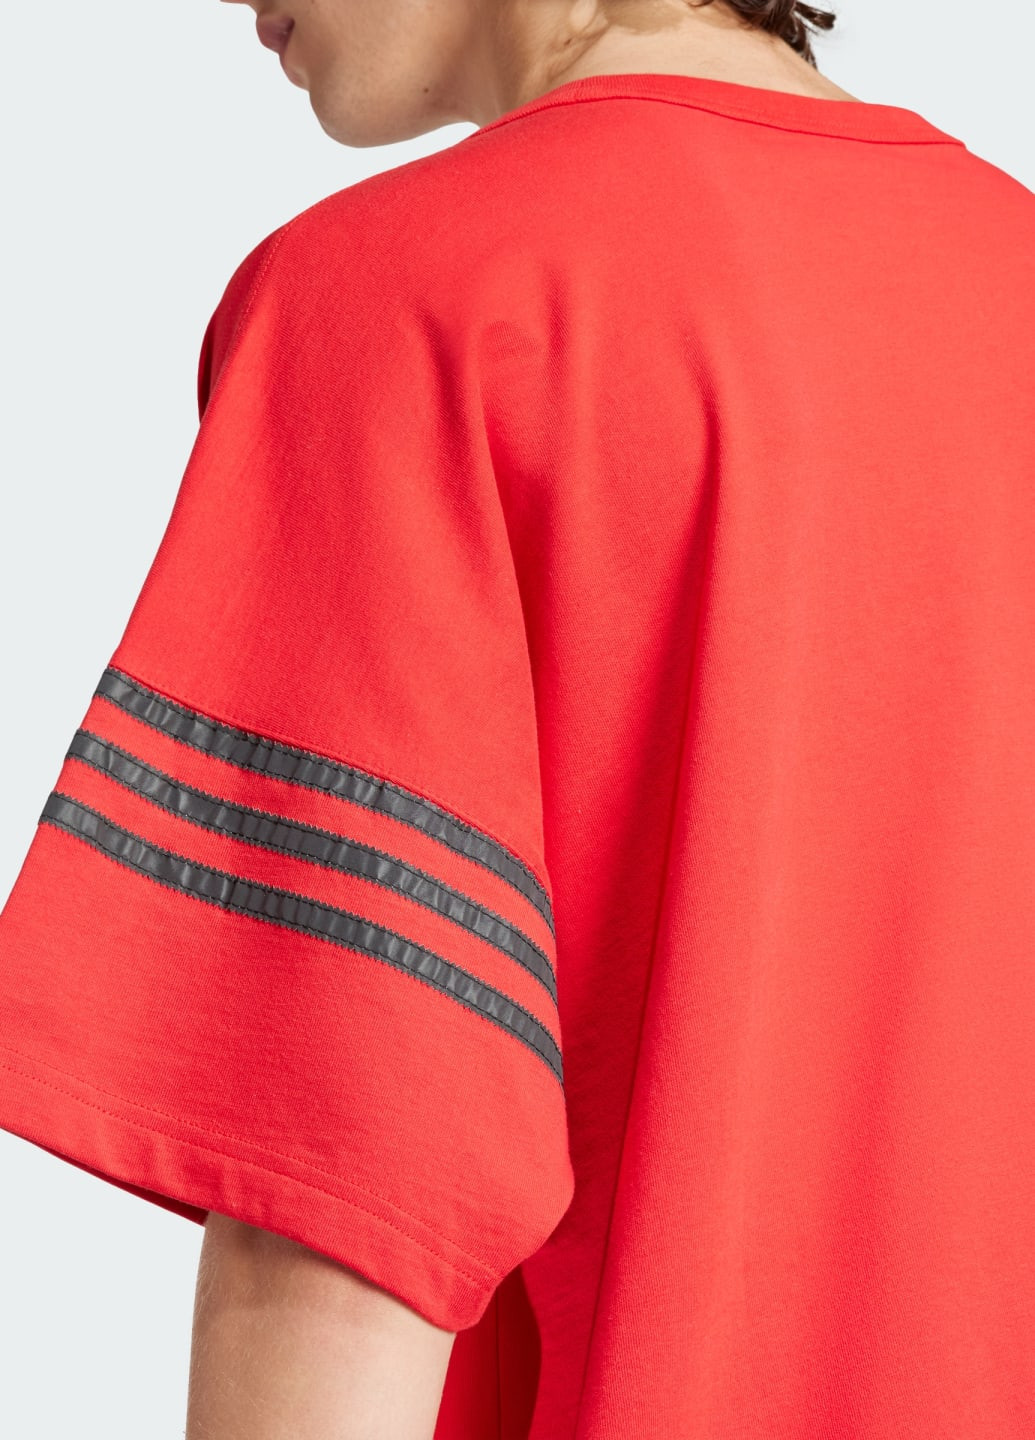 Красная футболка street neuclassic adidas